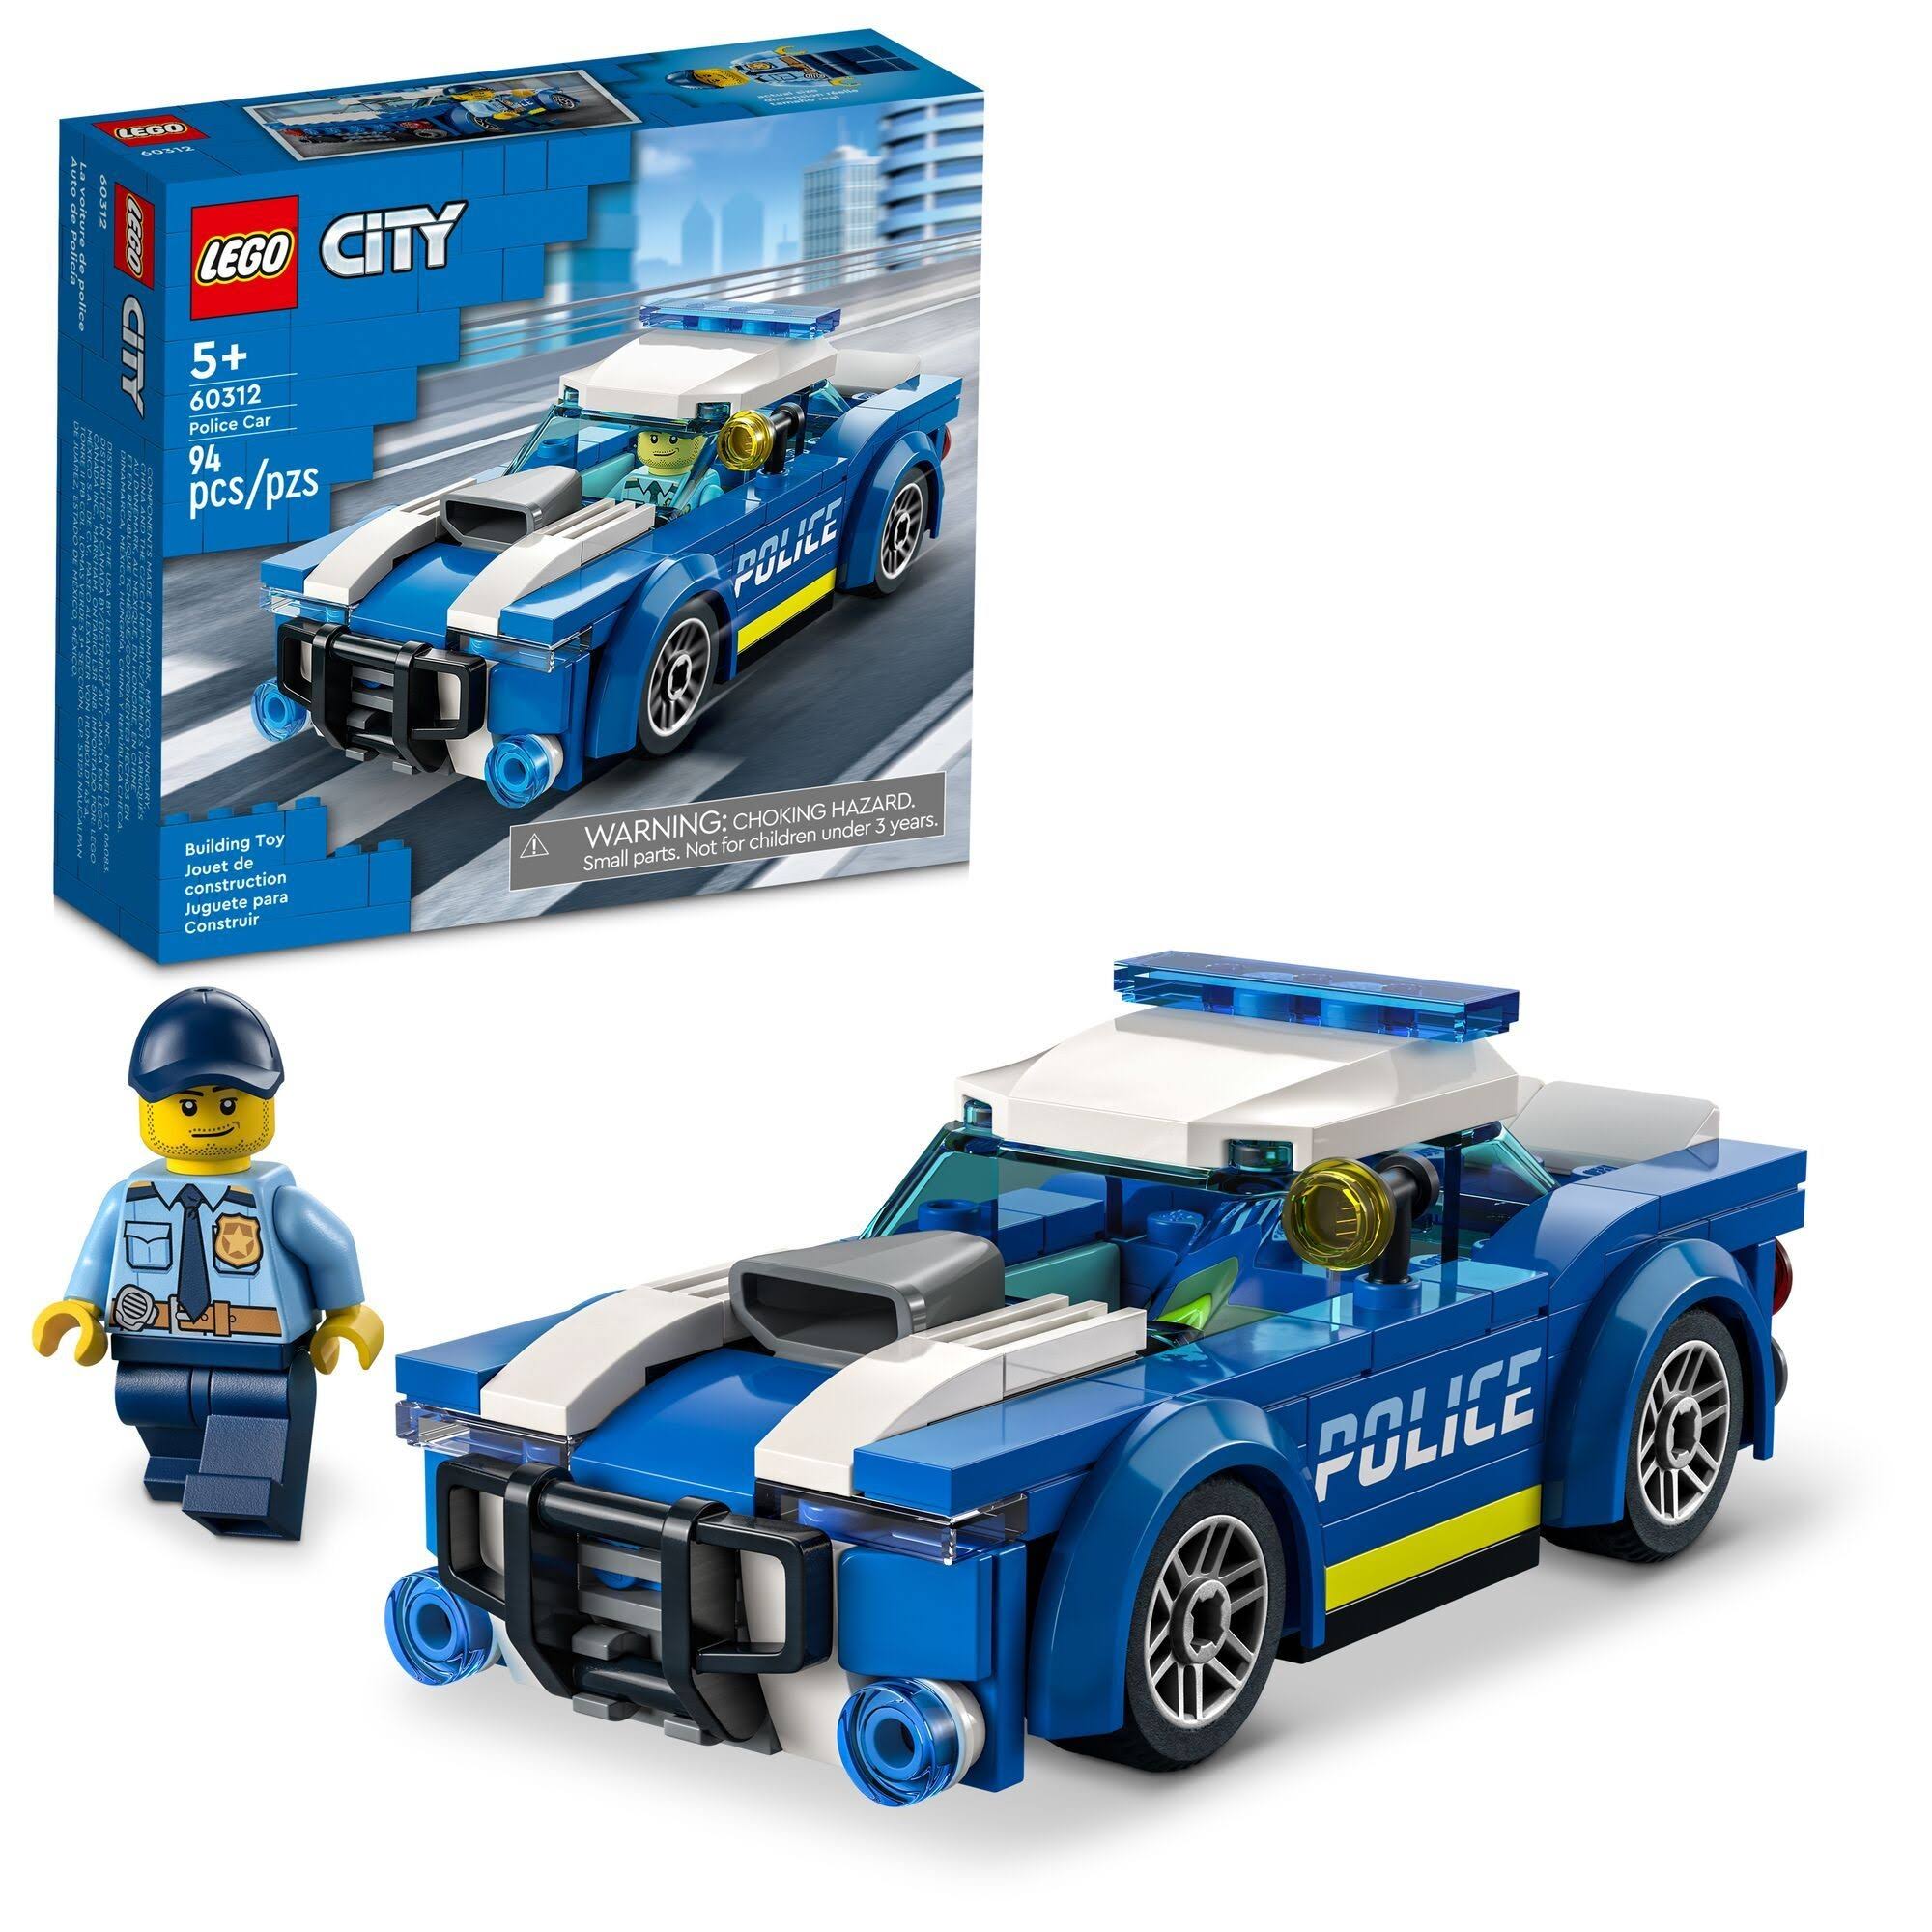 Lego 60312 City Police Car